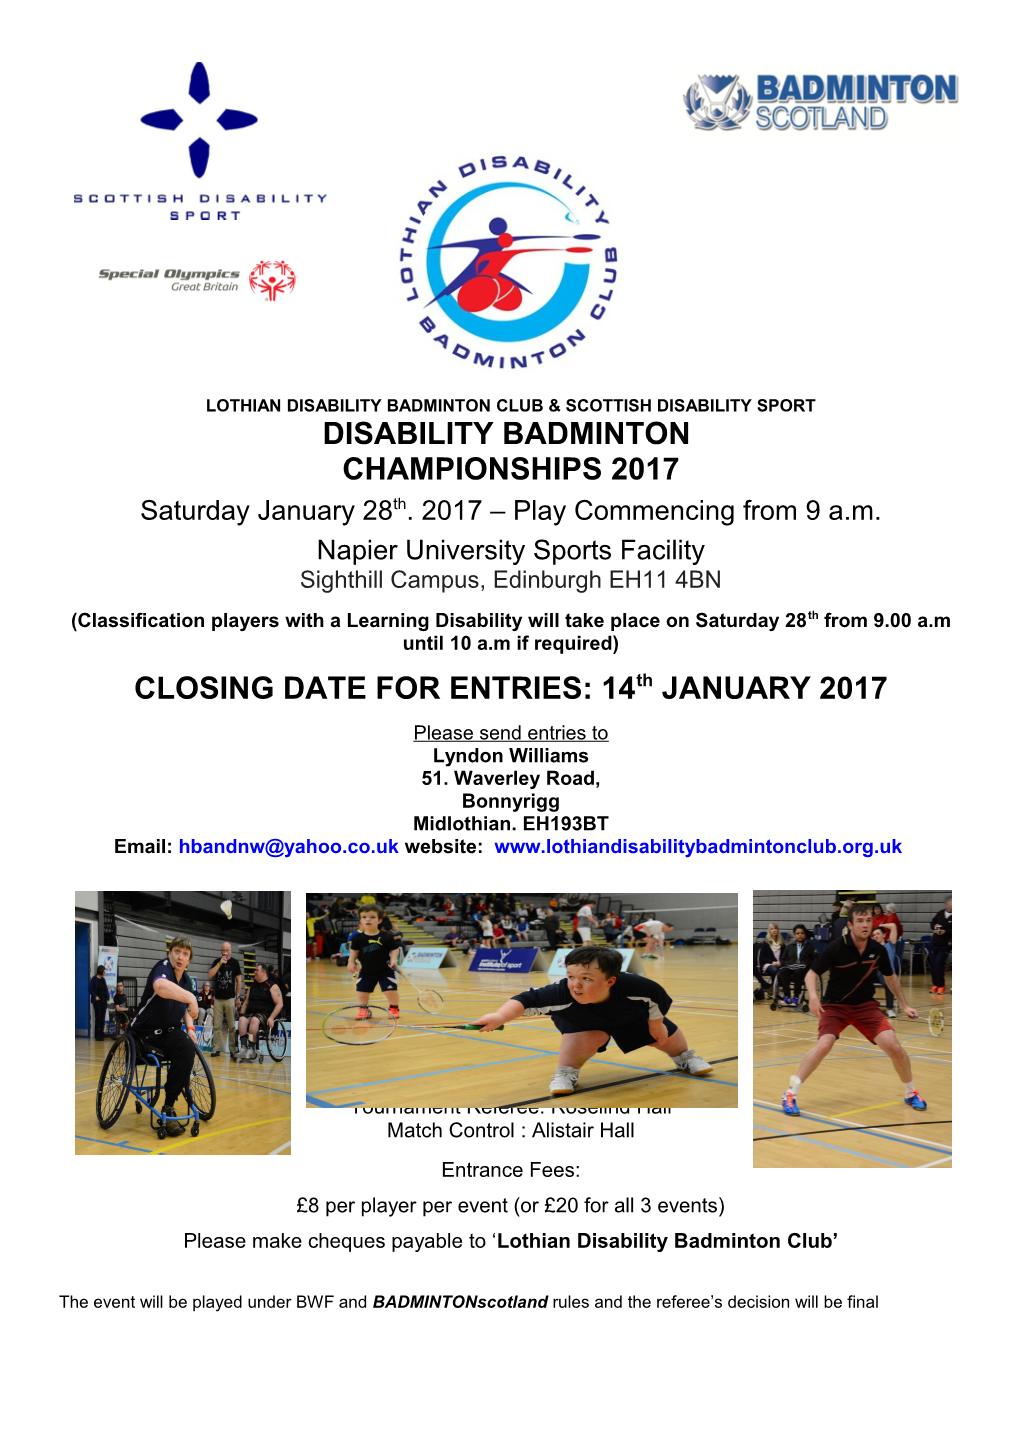 Lothian Disability Badminton Club & Scottish Disability Sport